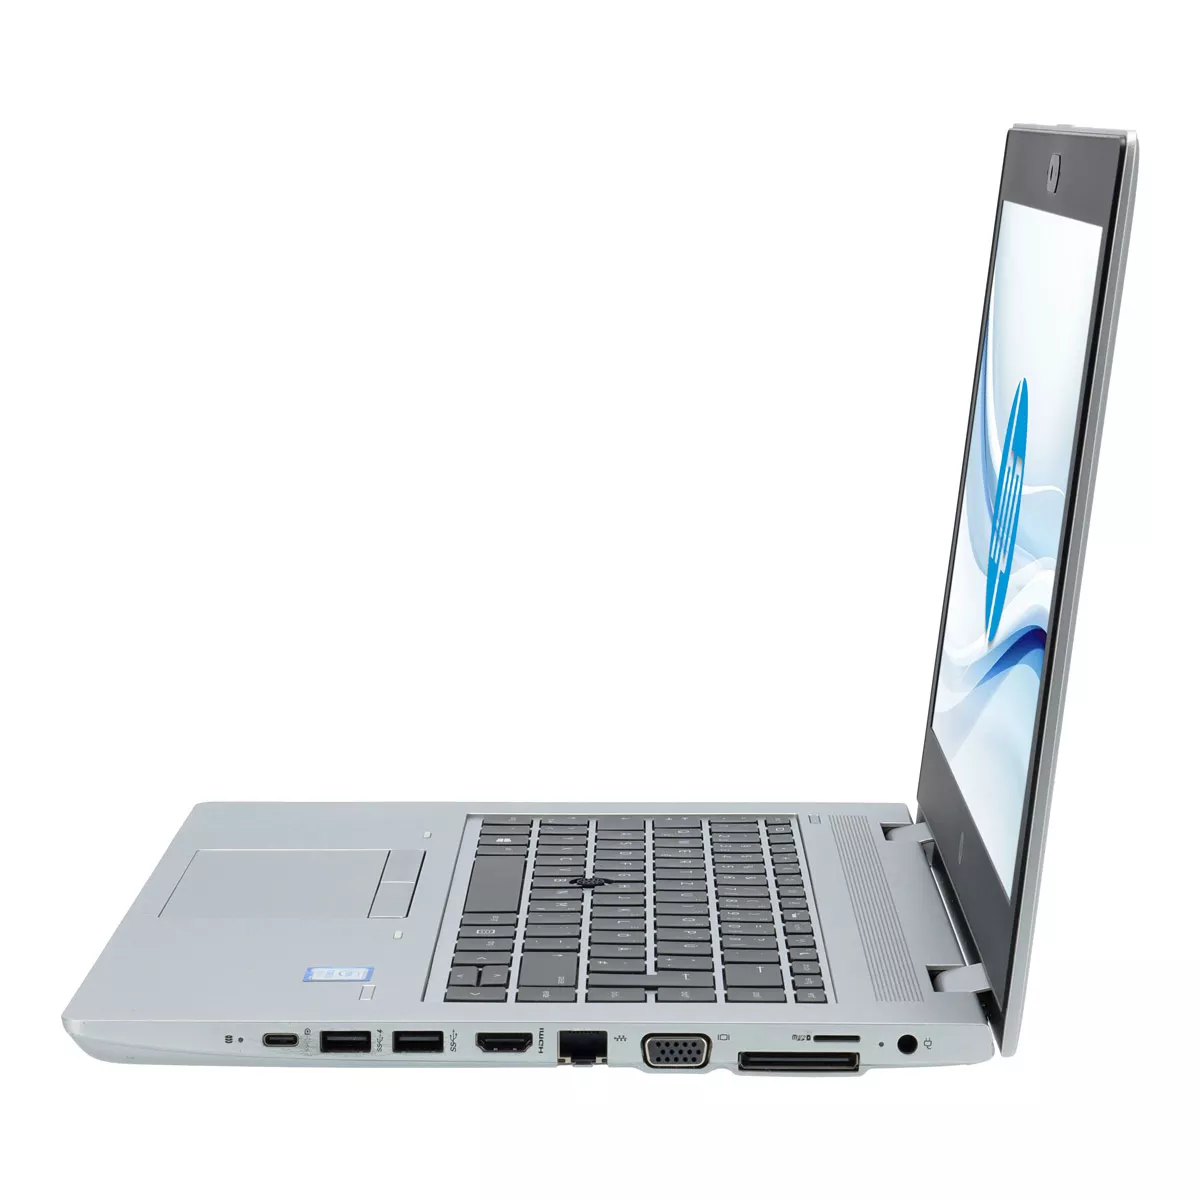 HP ProBook 640 G4 Core i7 8650U Full-HD 240 GB M.2 SSD Webcam A